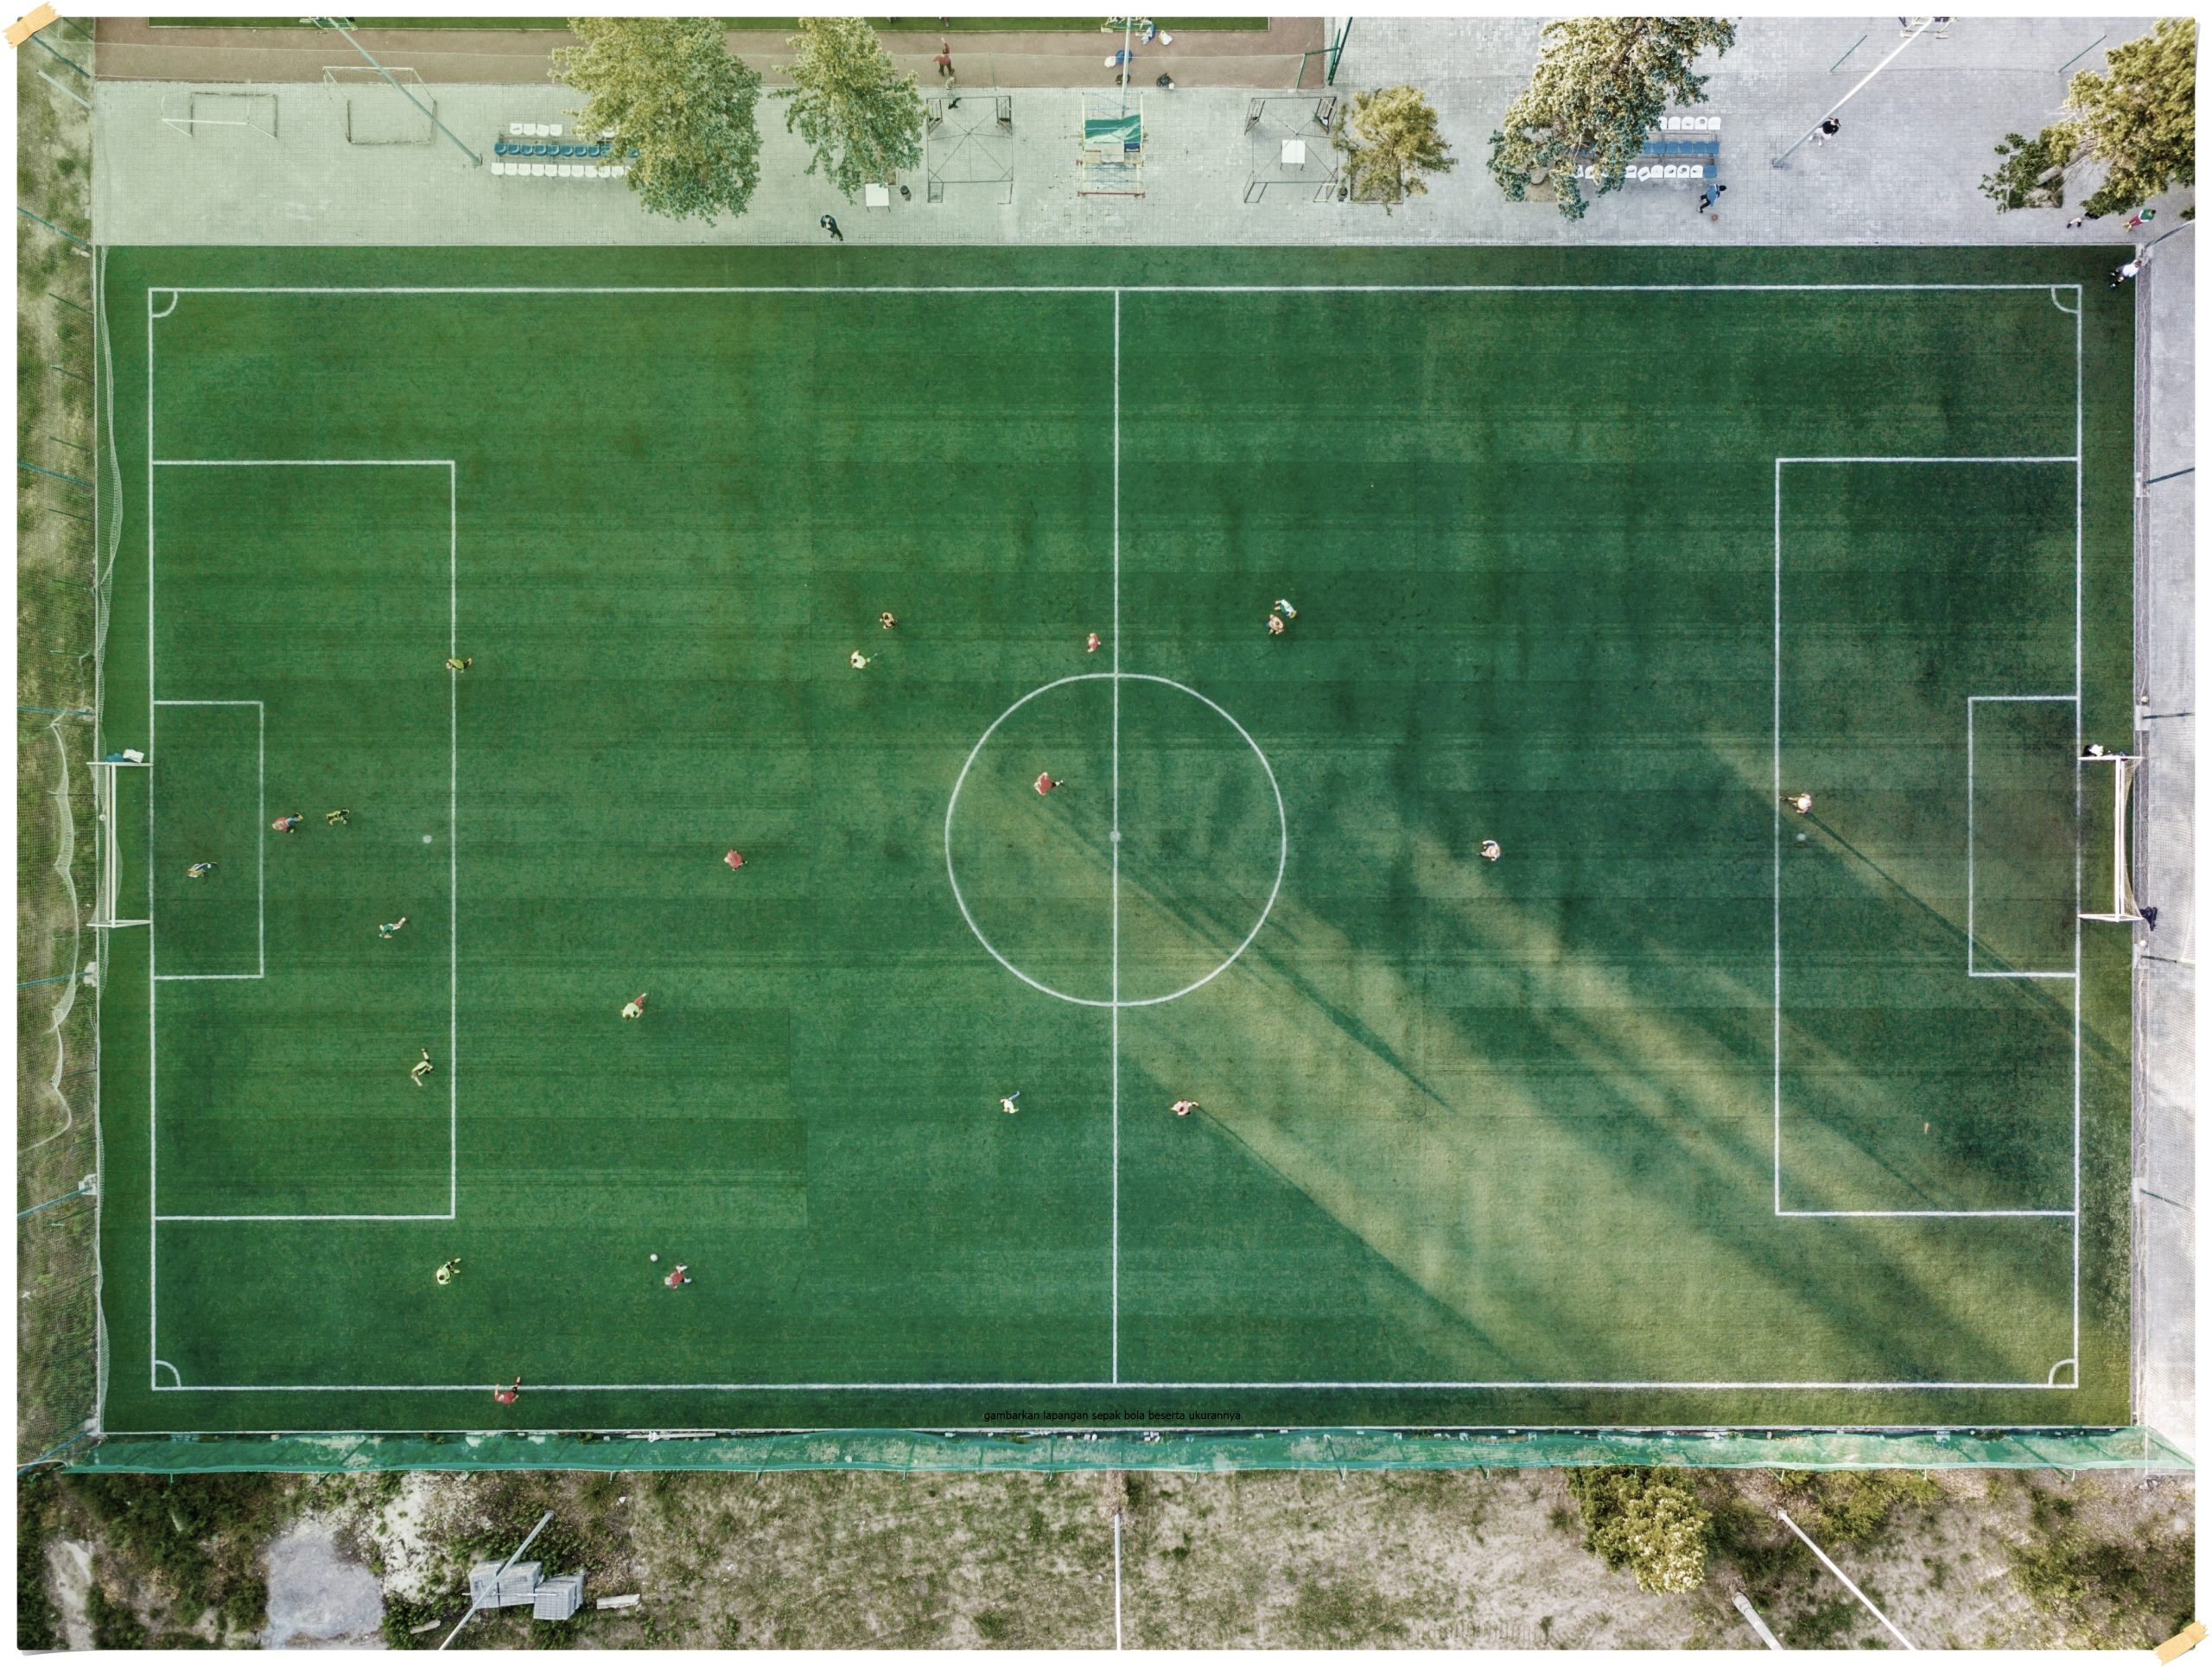 gambarkan lapangan sepak bola beserta ukurannya image